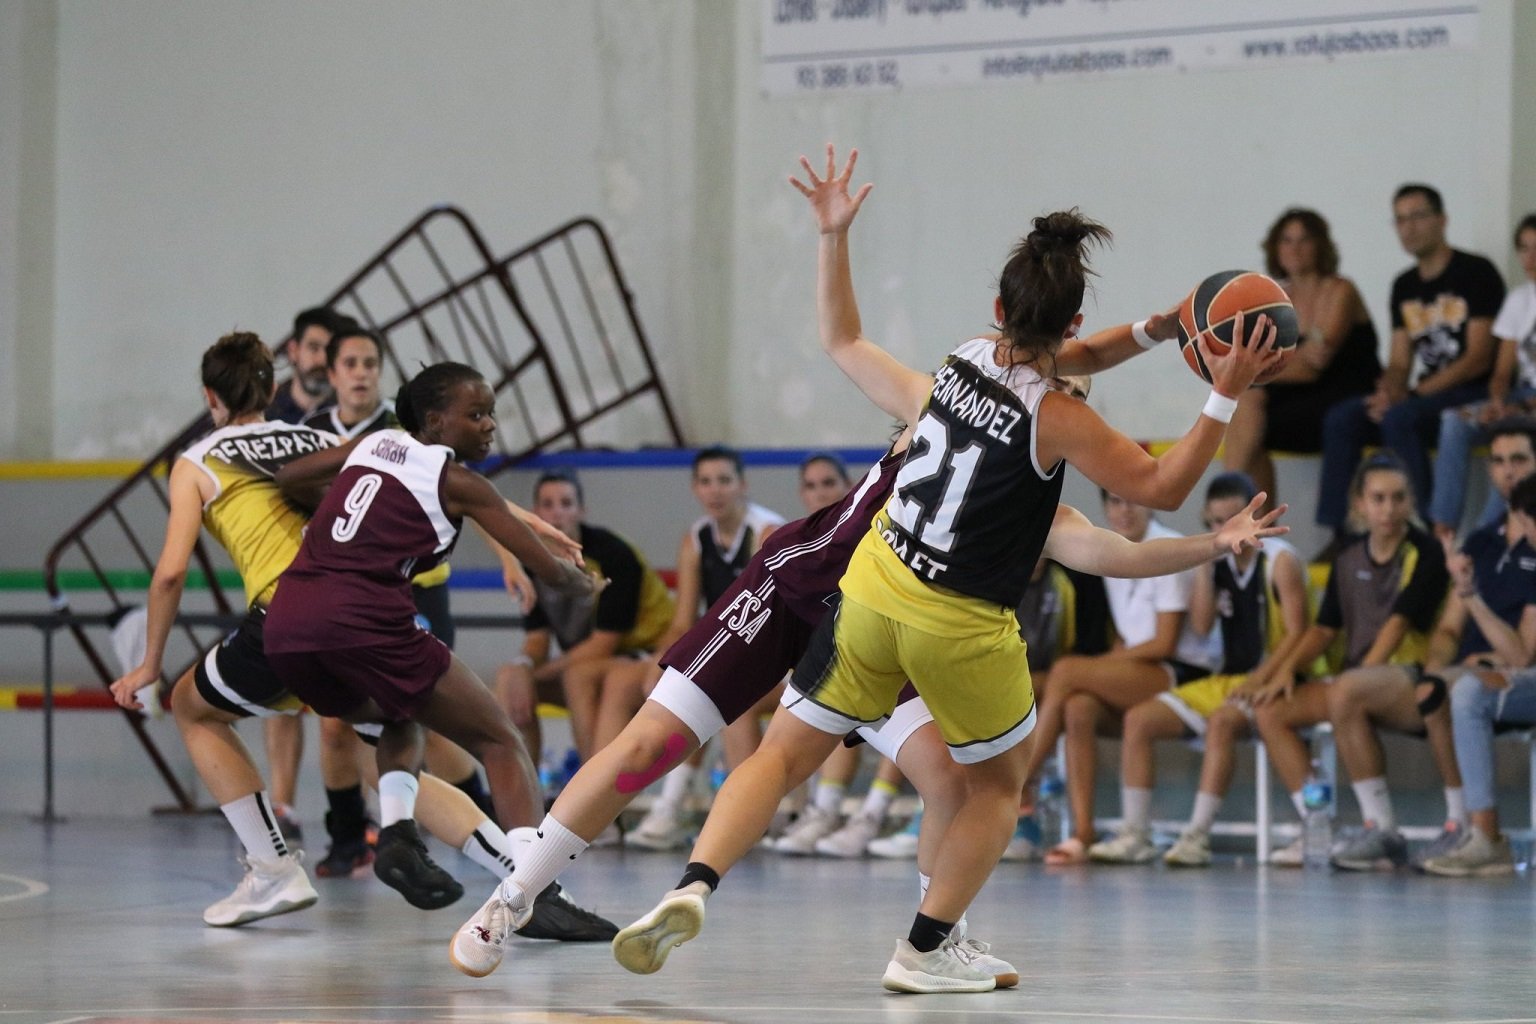 CEJ l’Hospitalet - Draft Gramenet i Basket Almeda – Cerdanyola, demà per XALA!